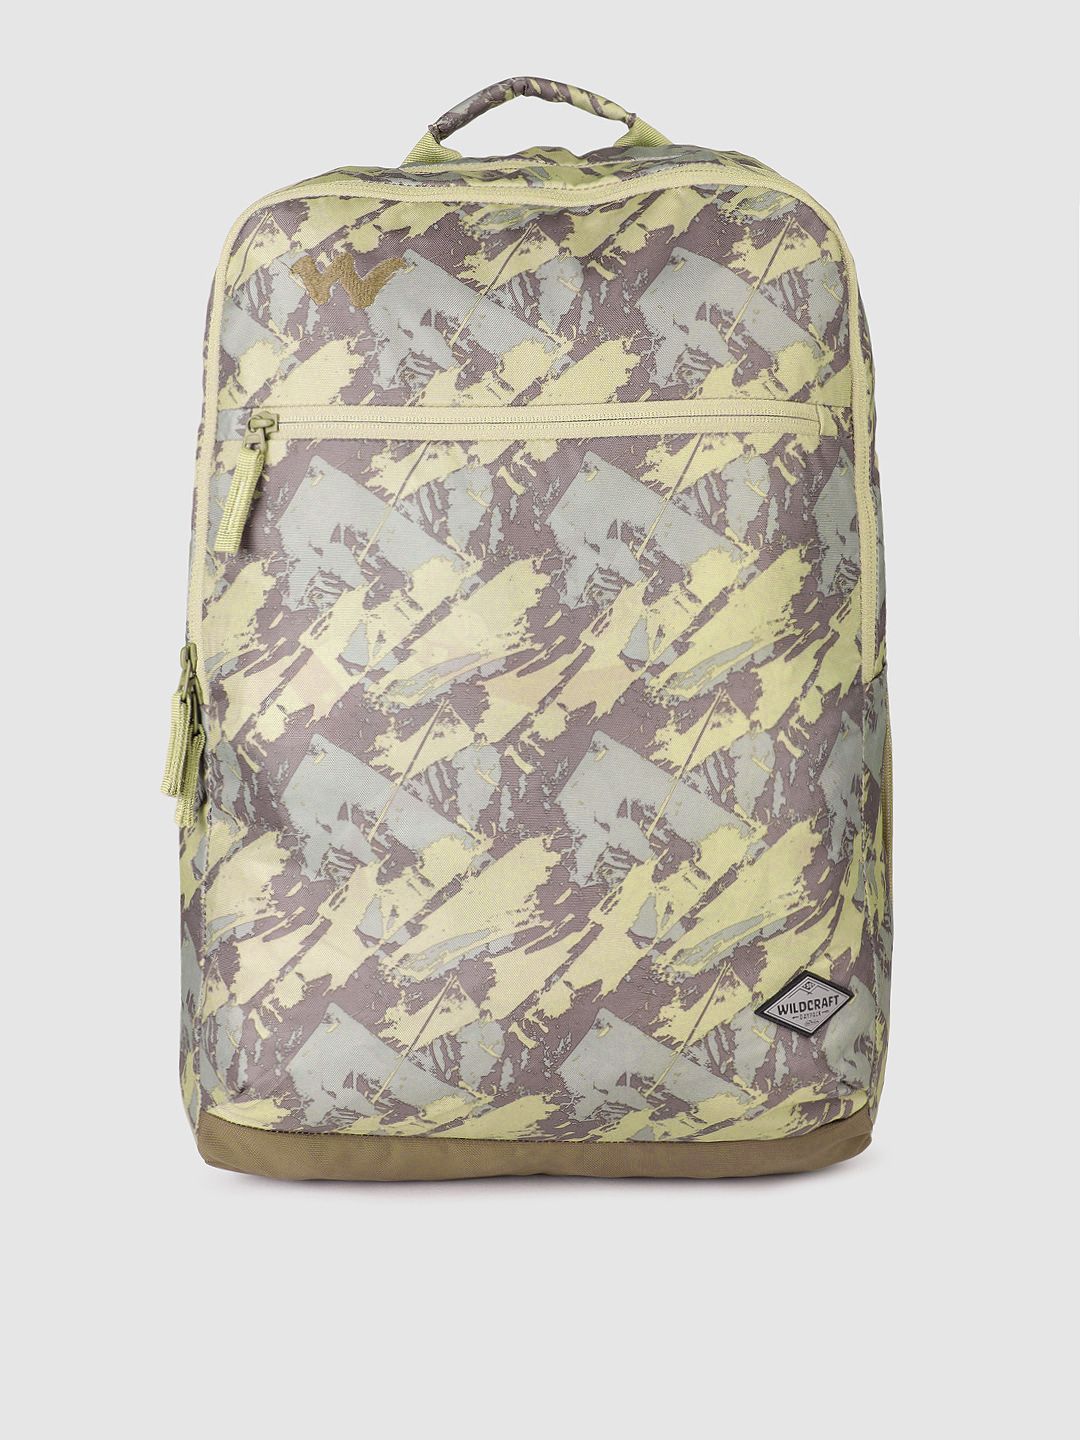 Wildcraft Unisex Brown & Beige Camouflage Backpack Price in India